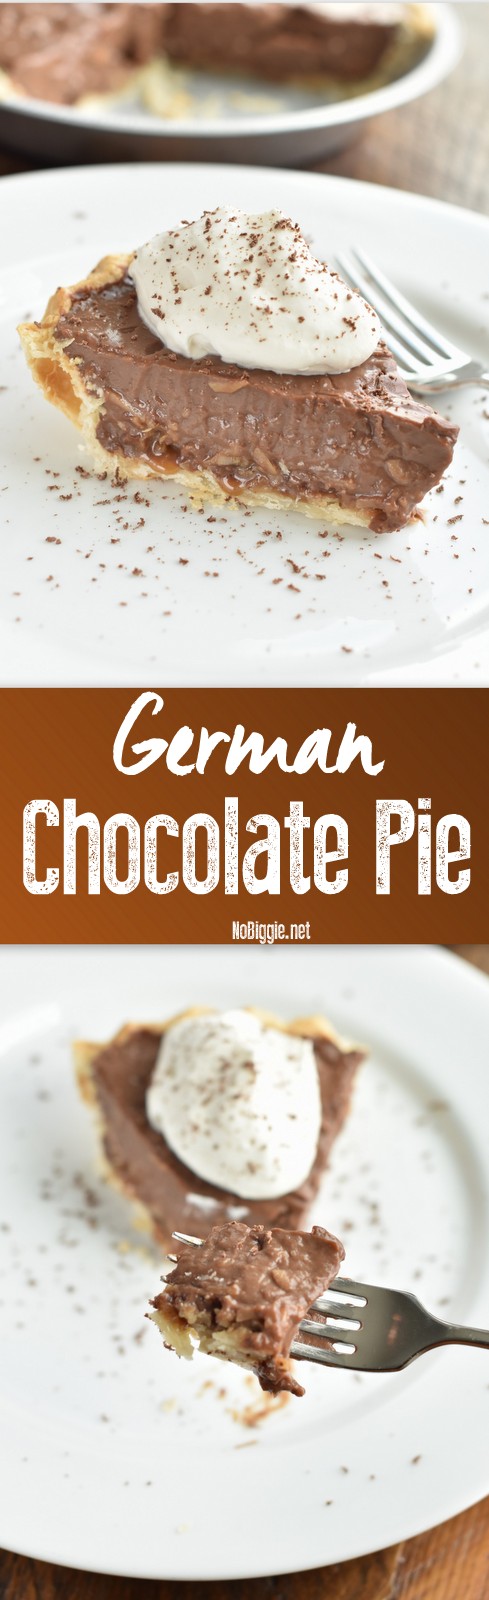 German Chocolate Pie | NoBiggie.net